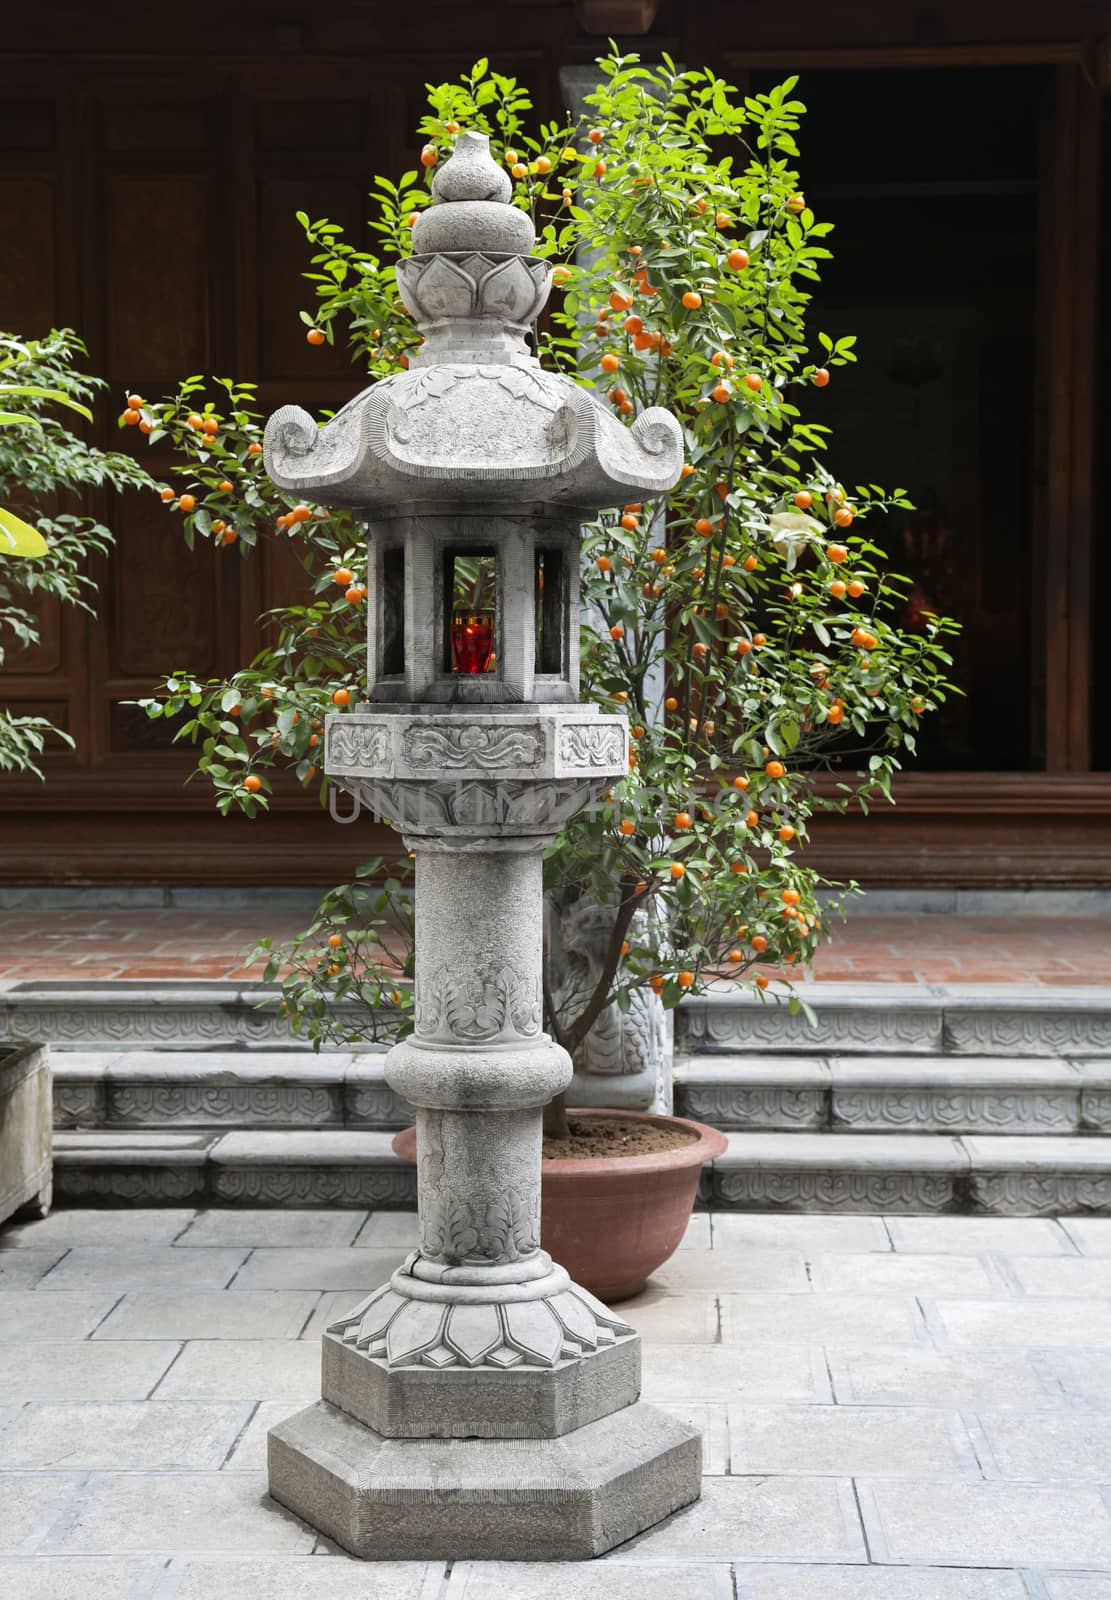 Stone buddhist lamp in japanese garden by Goodday